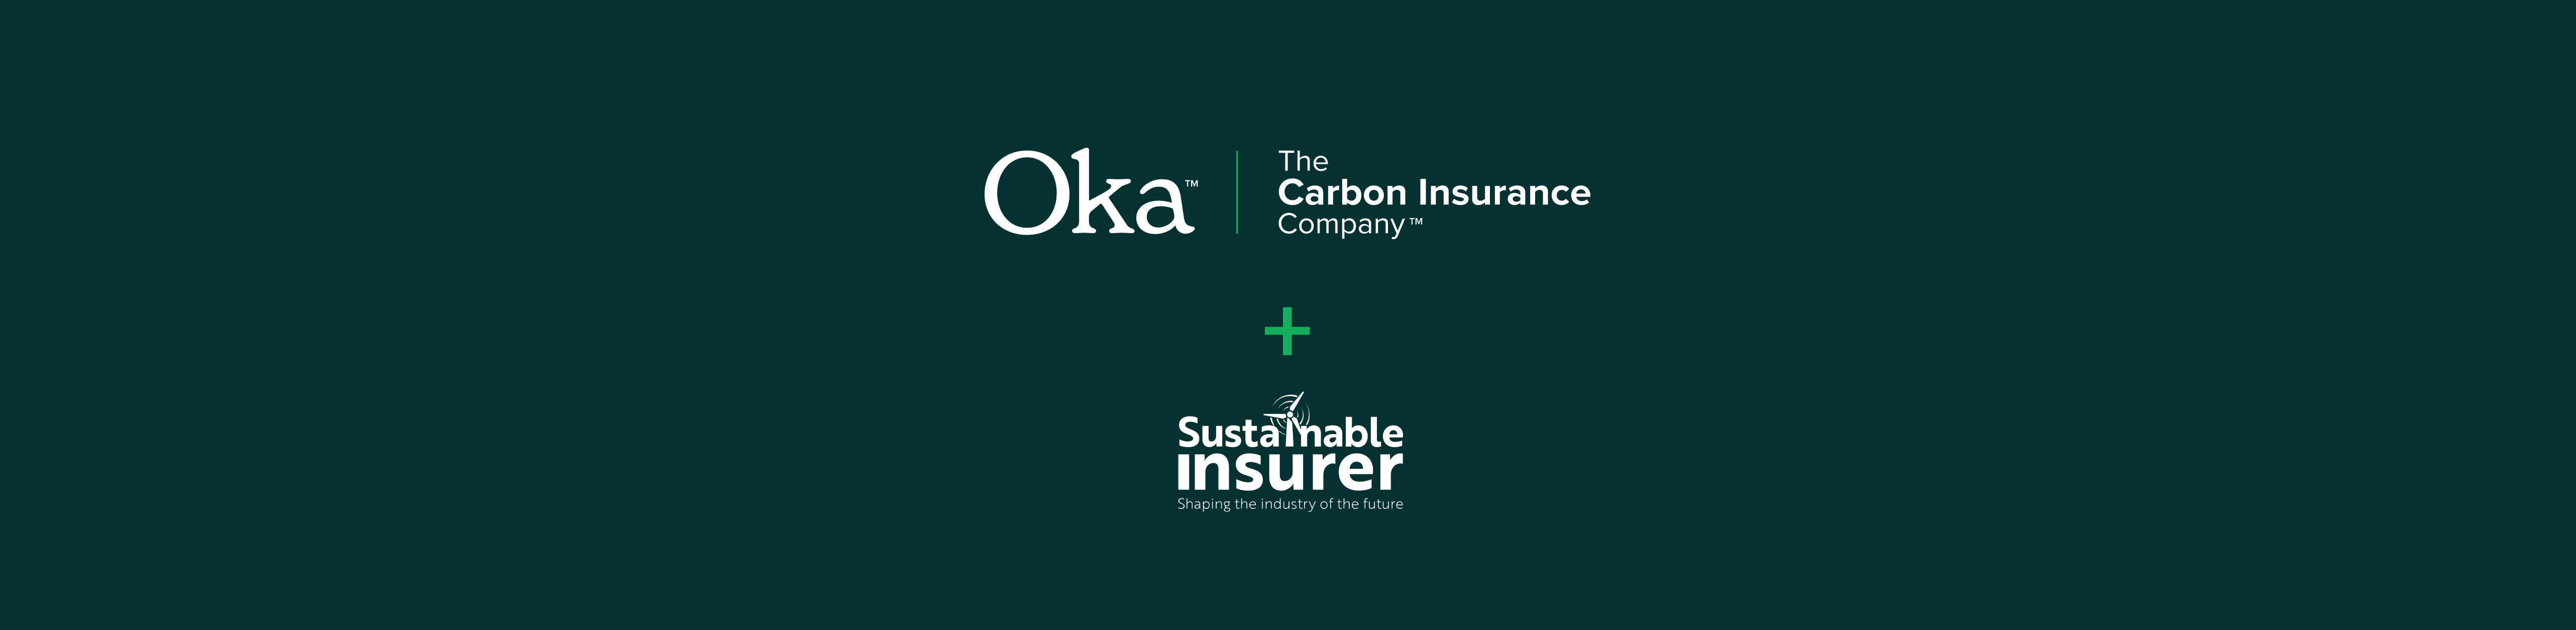 sustainable insurer interview blog